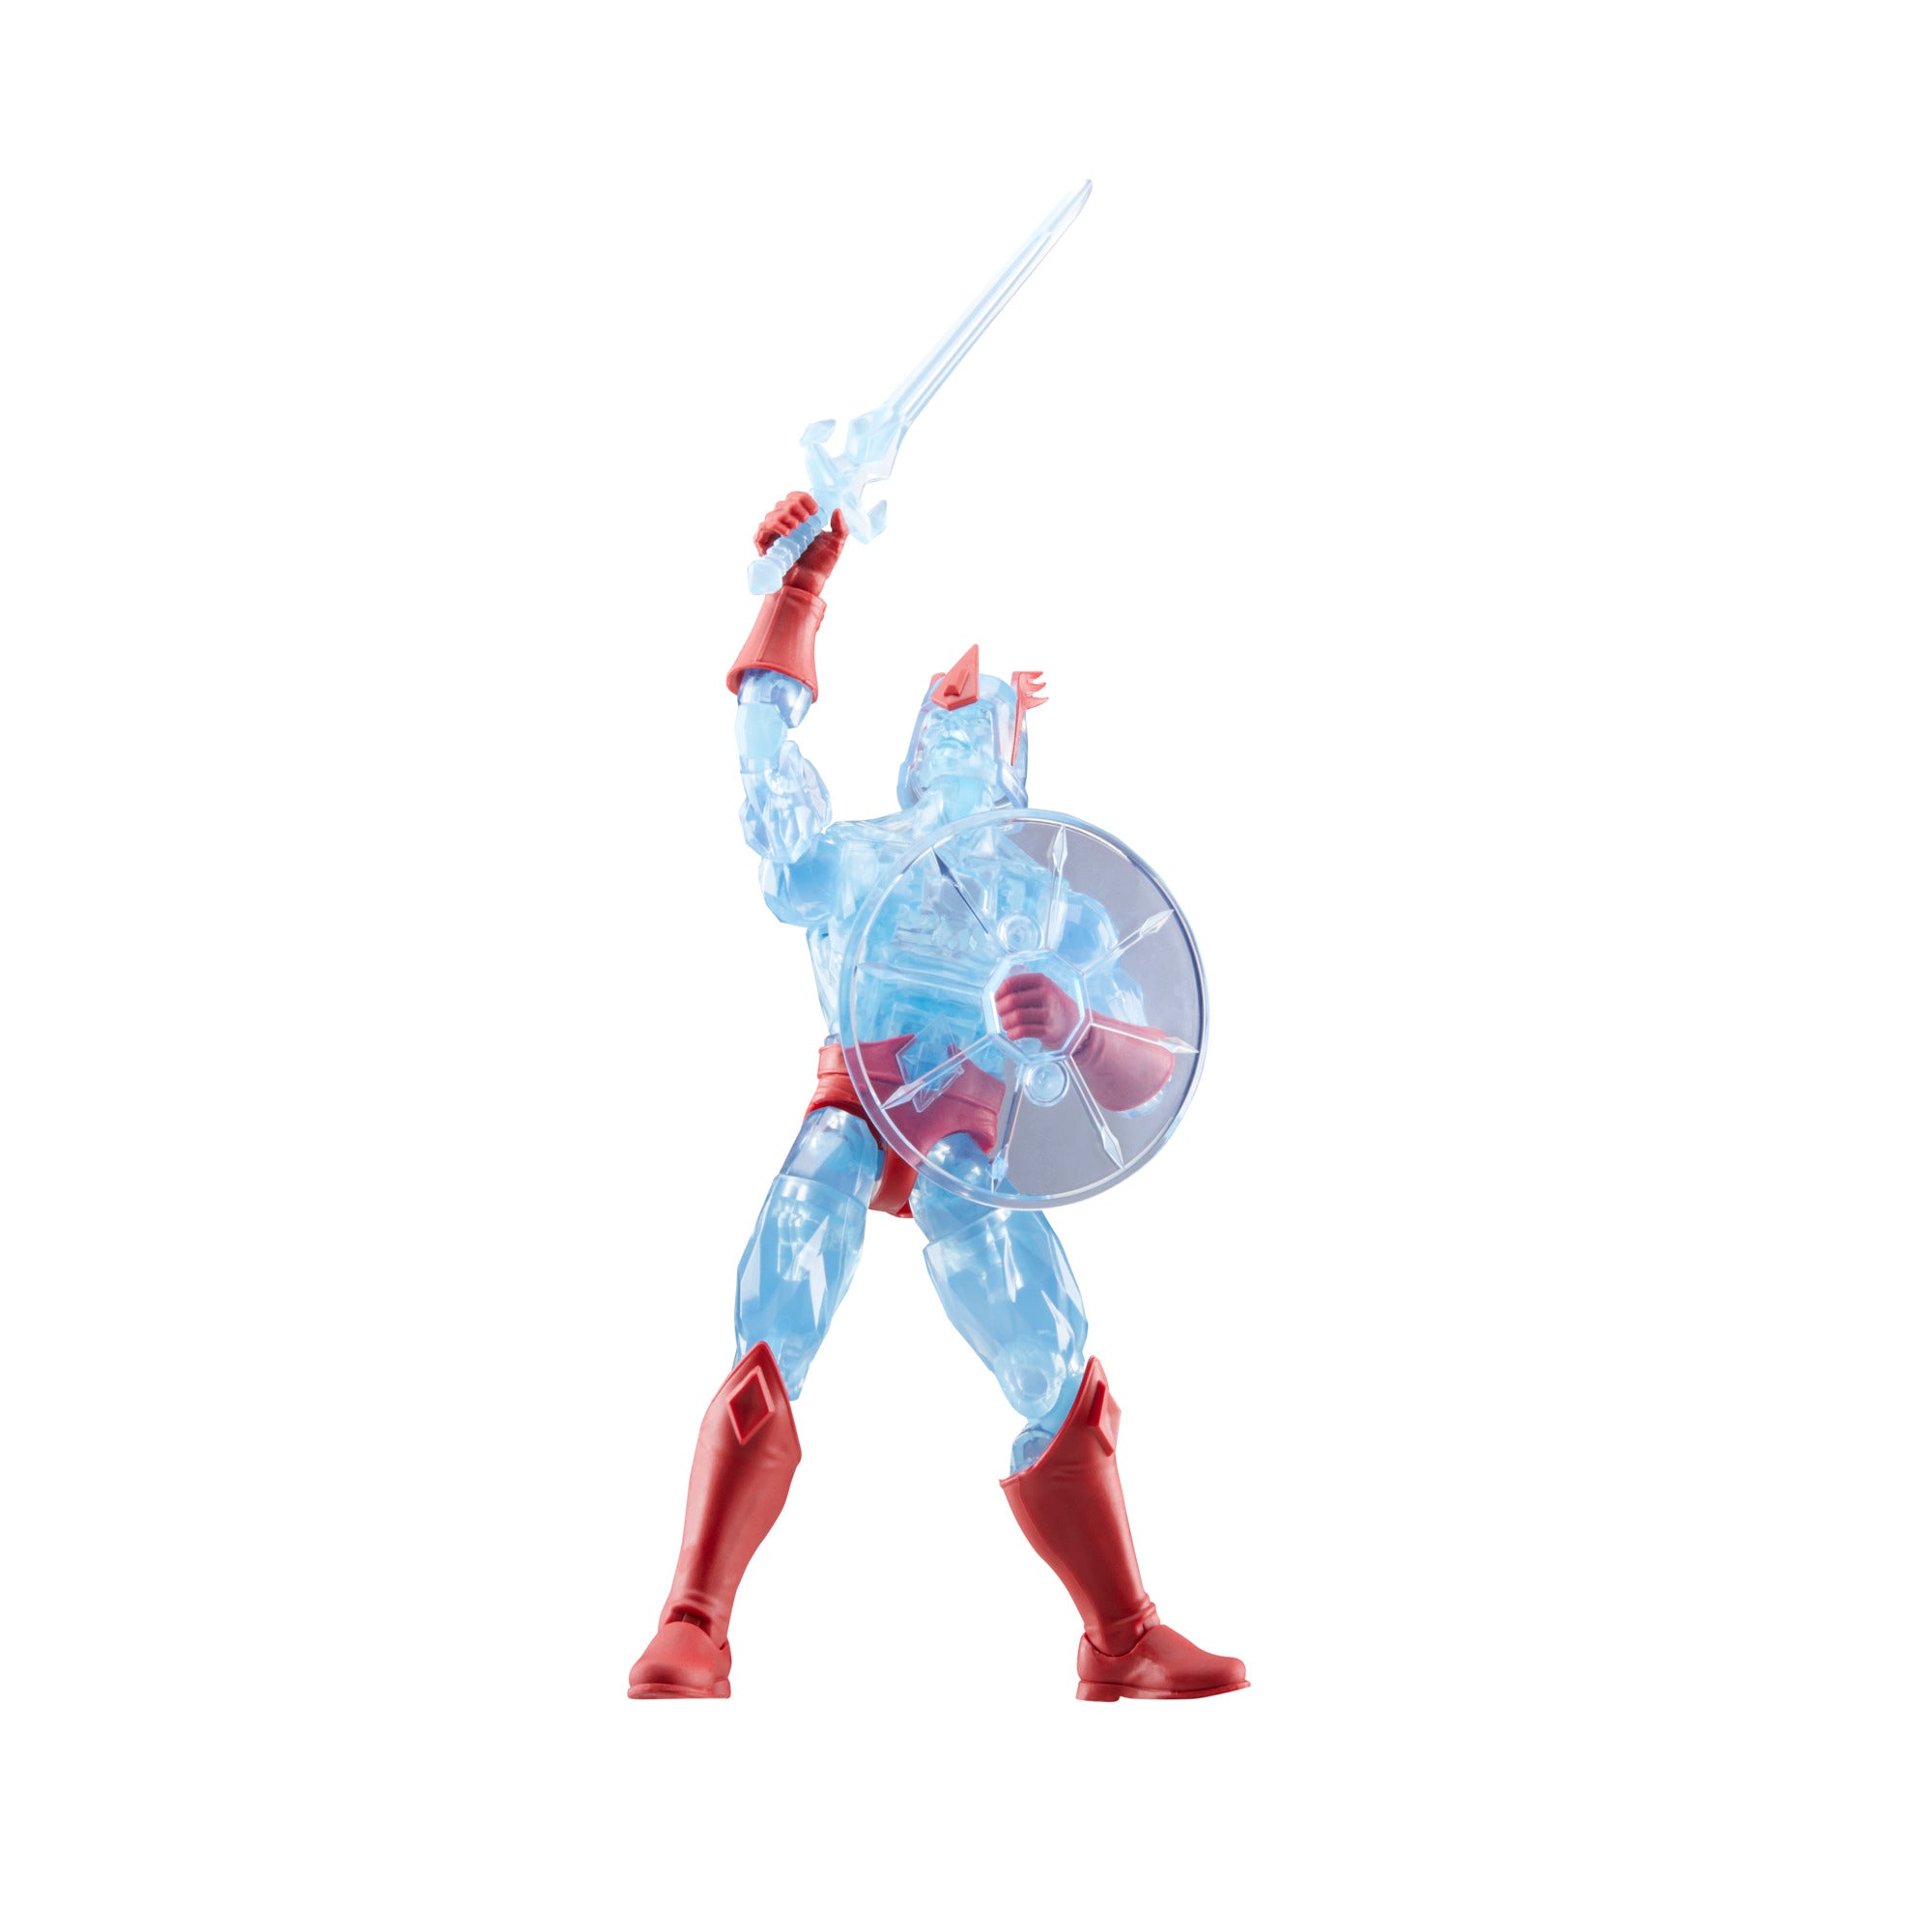 Hasbro Spider-Man Retro Marvel Legends Kingpin Action Figure Set 3 Pieces,  1 set - Baker's